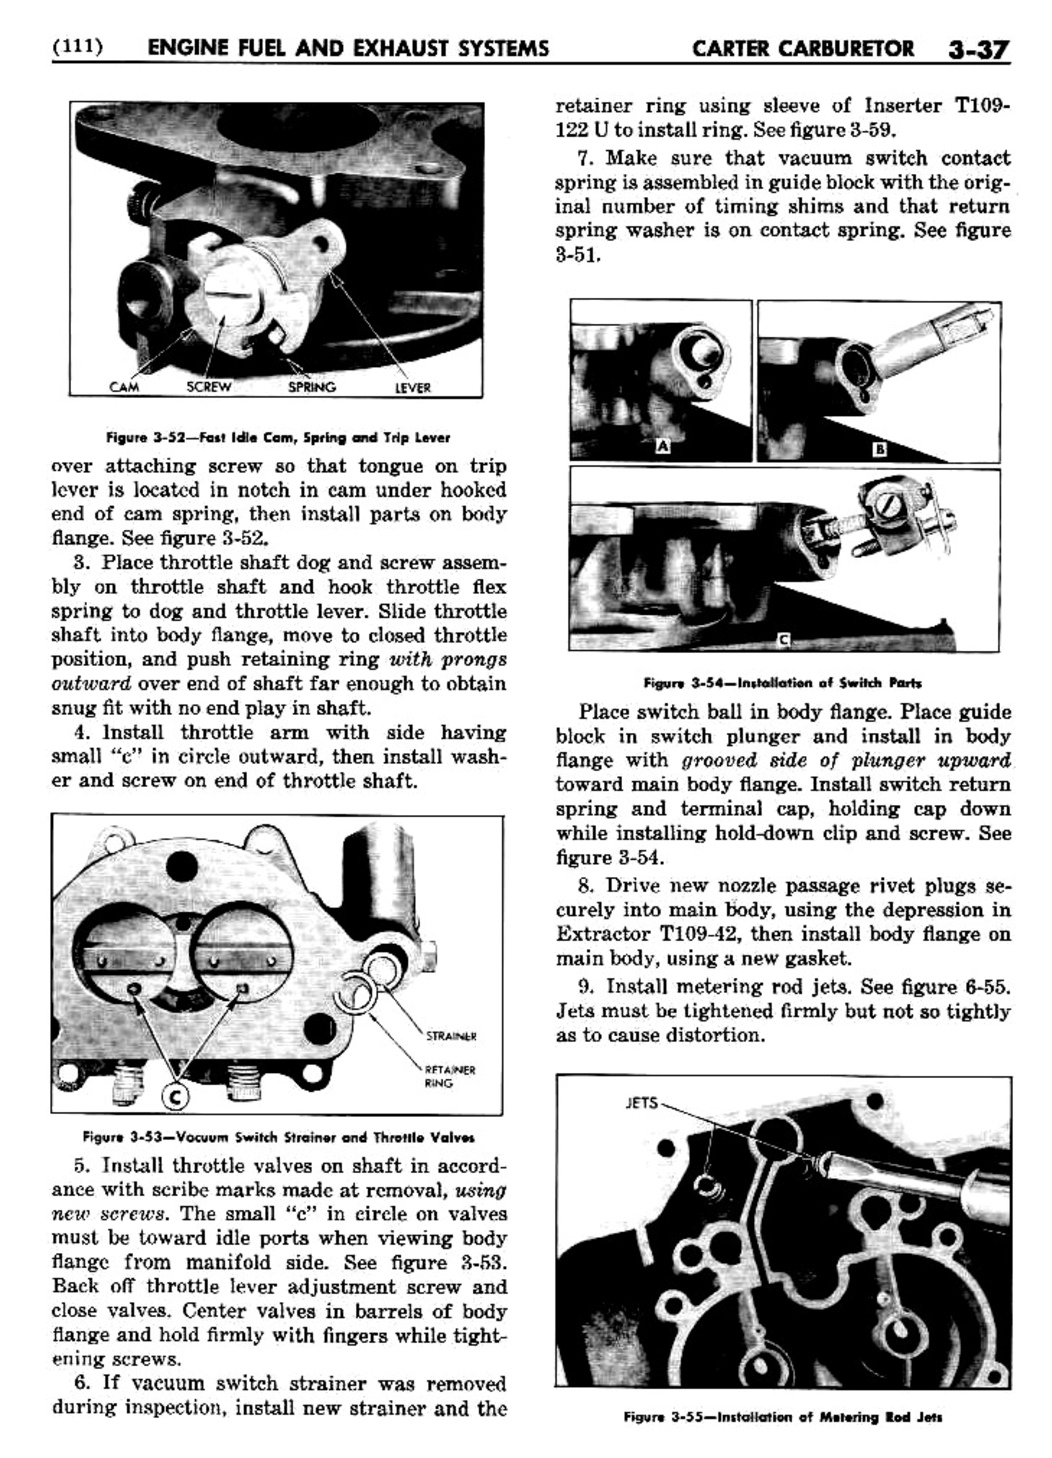 n_04 1948 Buick Shop Manual - Engine Fuel & Exhaust-037-037.jpg